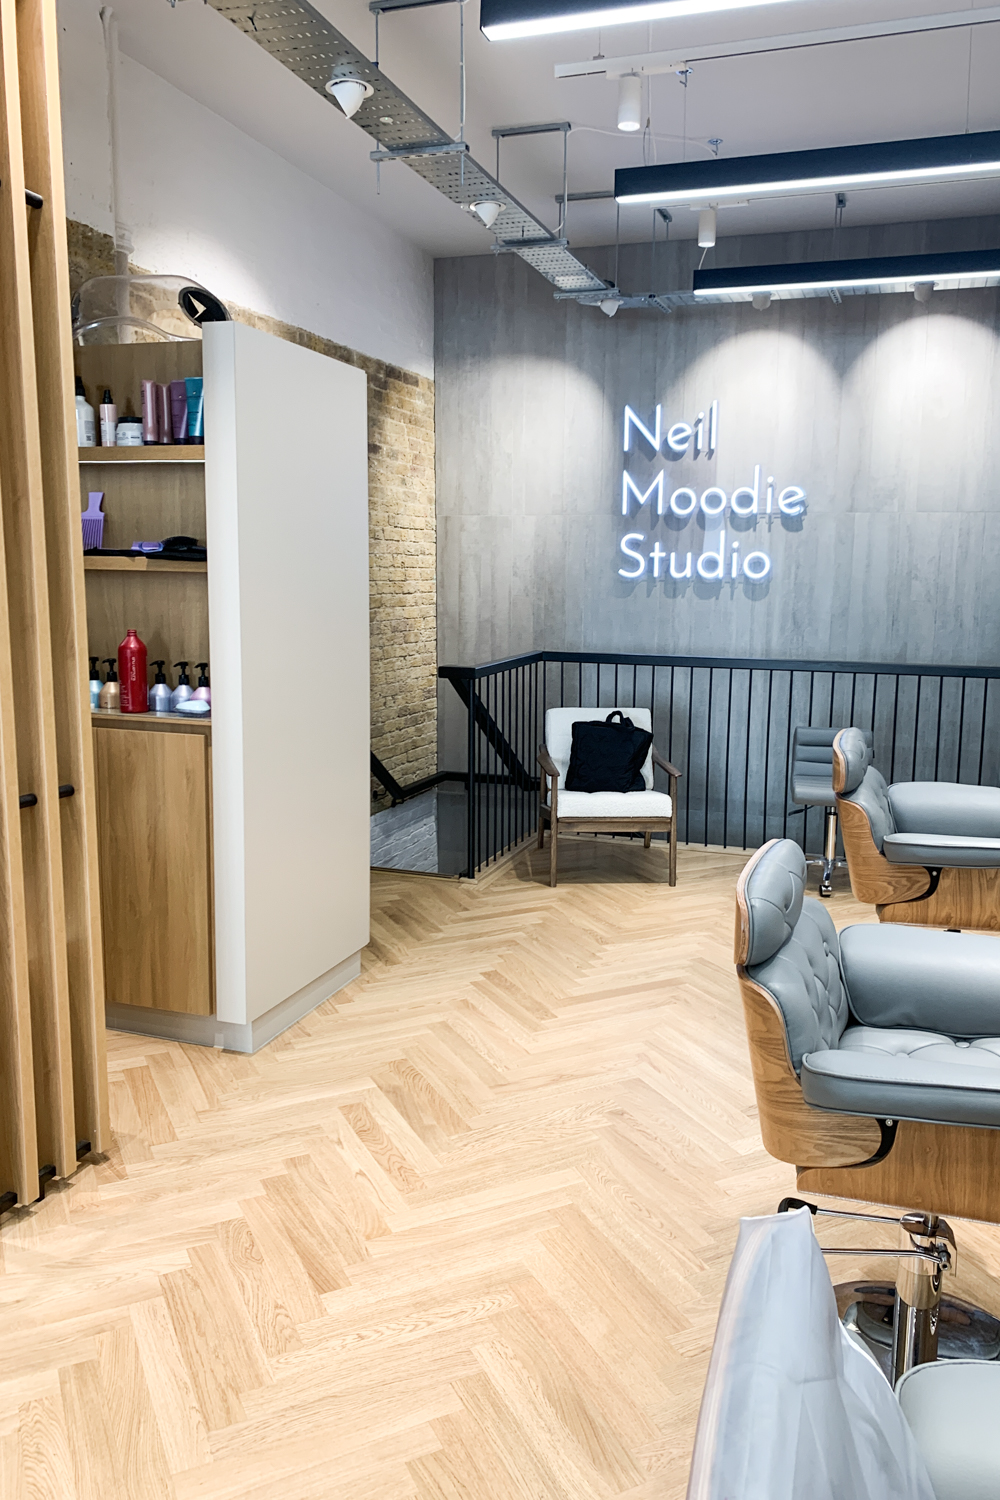 Interior of Neil Moodie Studio in Spitalfields